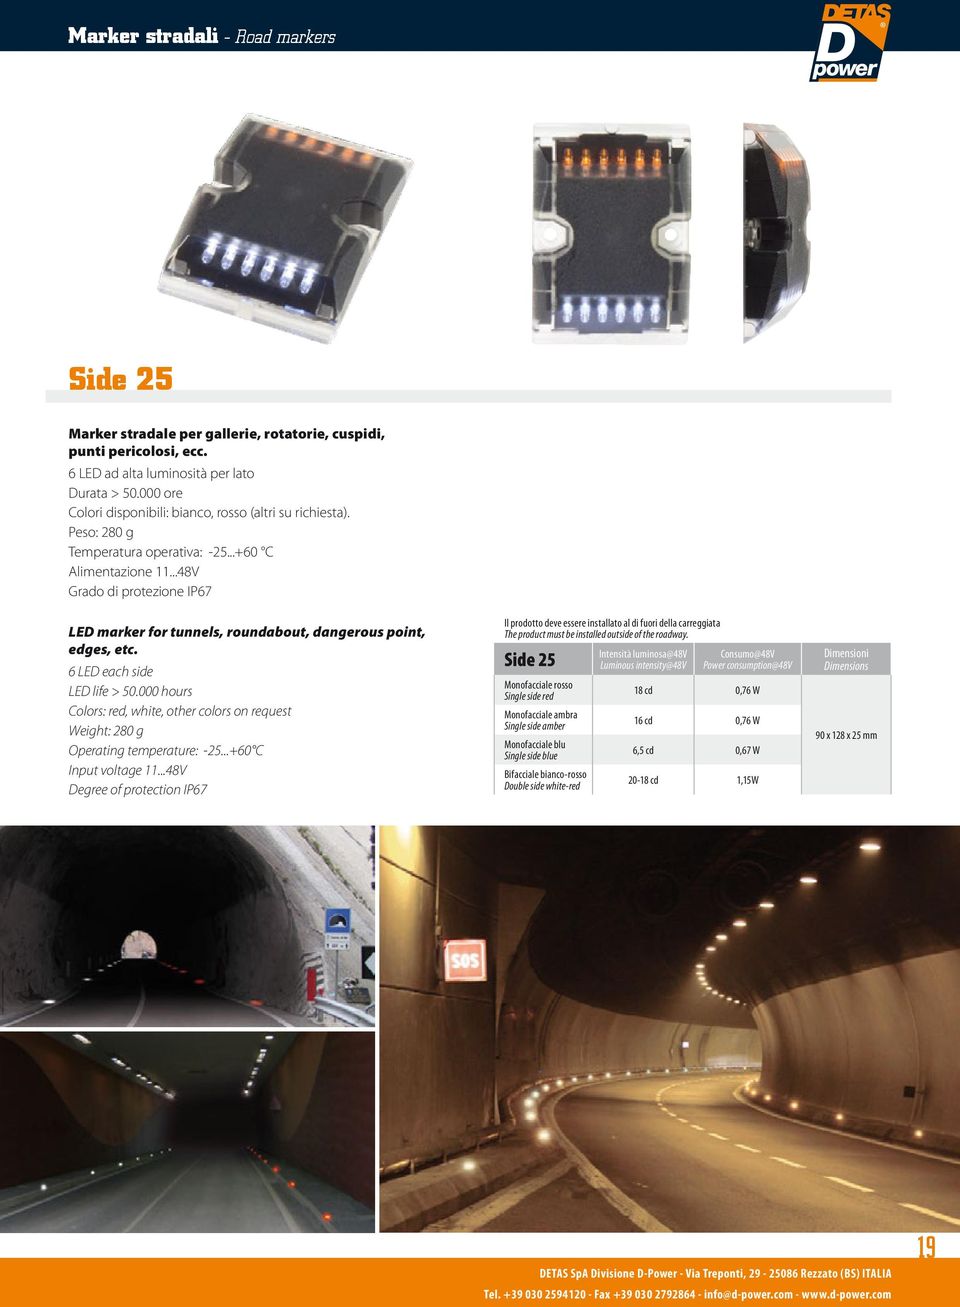 ..48V Grado di protezione IP67 LED marker for tunnels, roundabout, dangerous point, edges, etc. 6 LED each side LED life > 50.